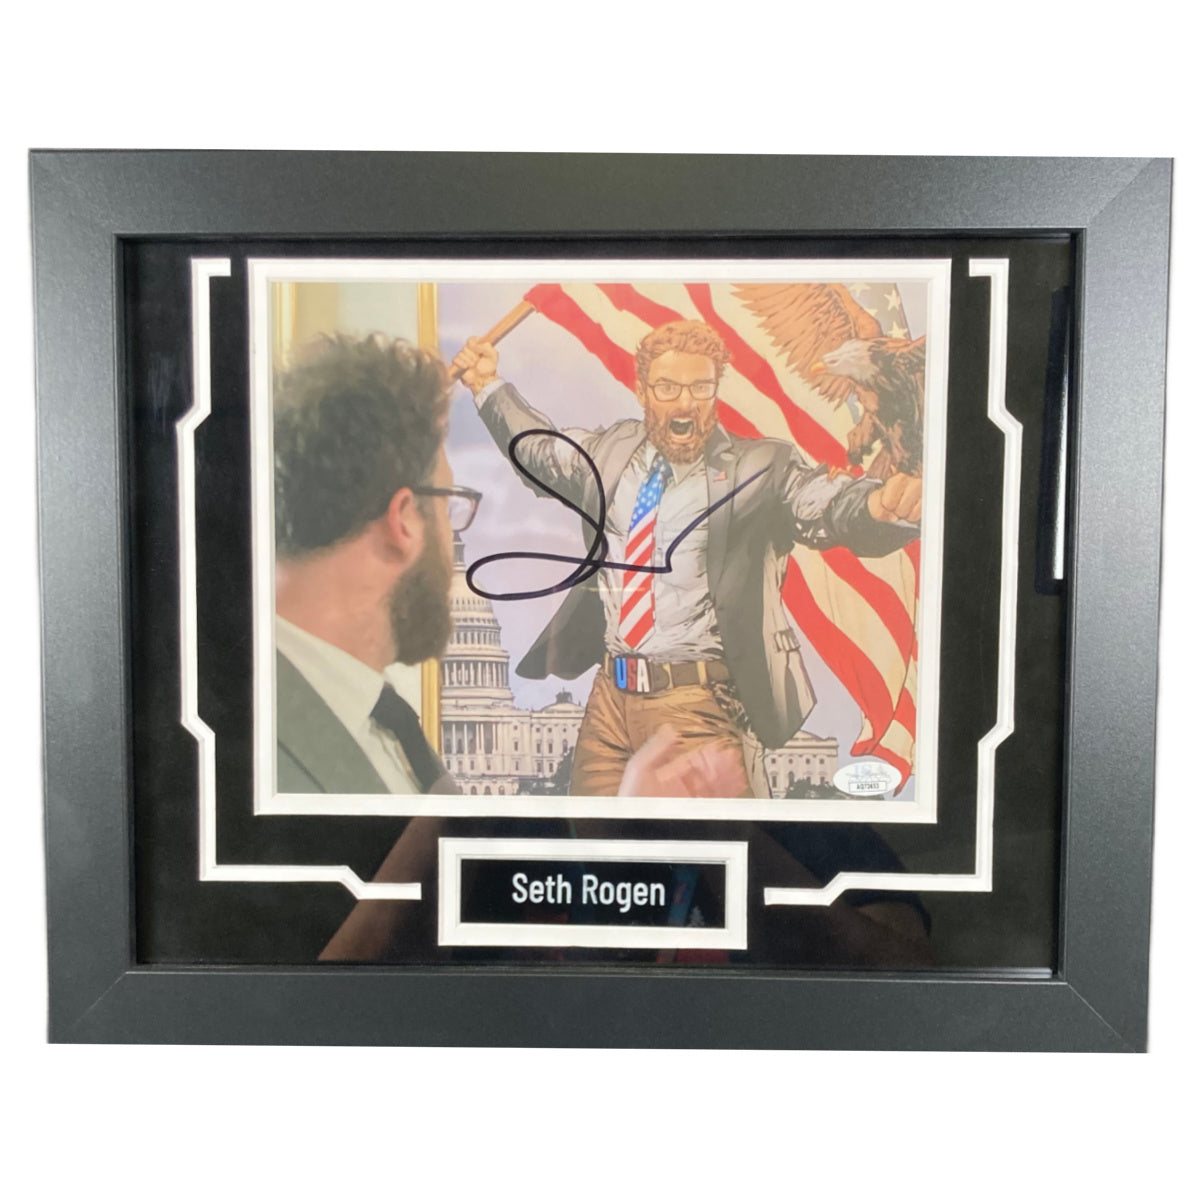 Seth Rogan Signed And Custom Framed 8x10 Photo Autographed JSA COA